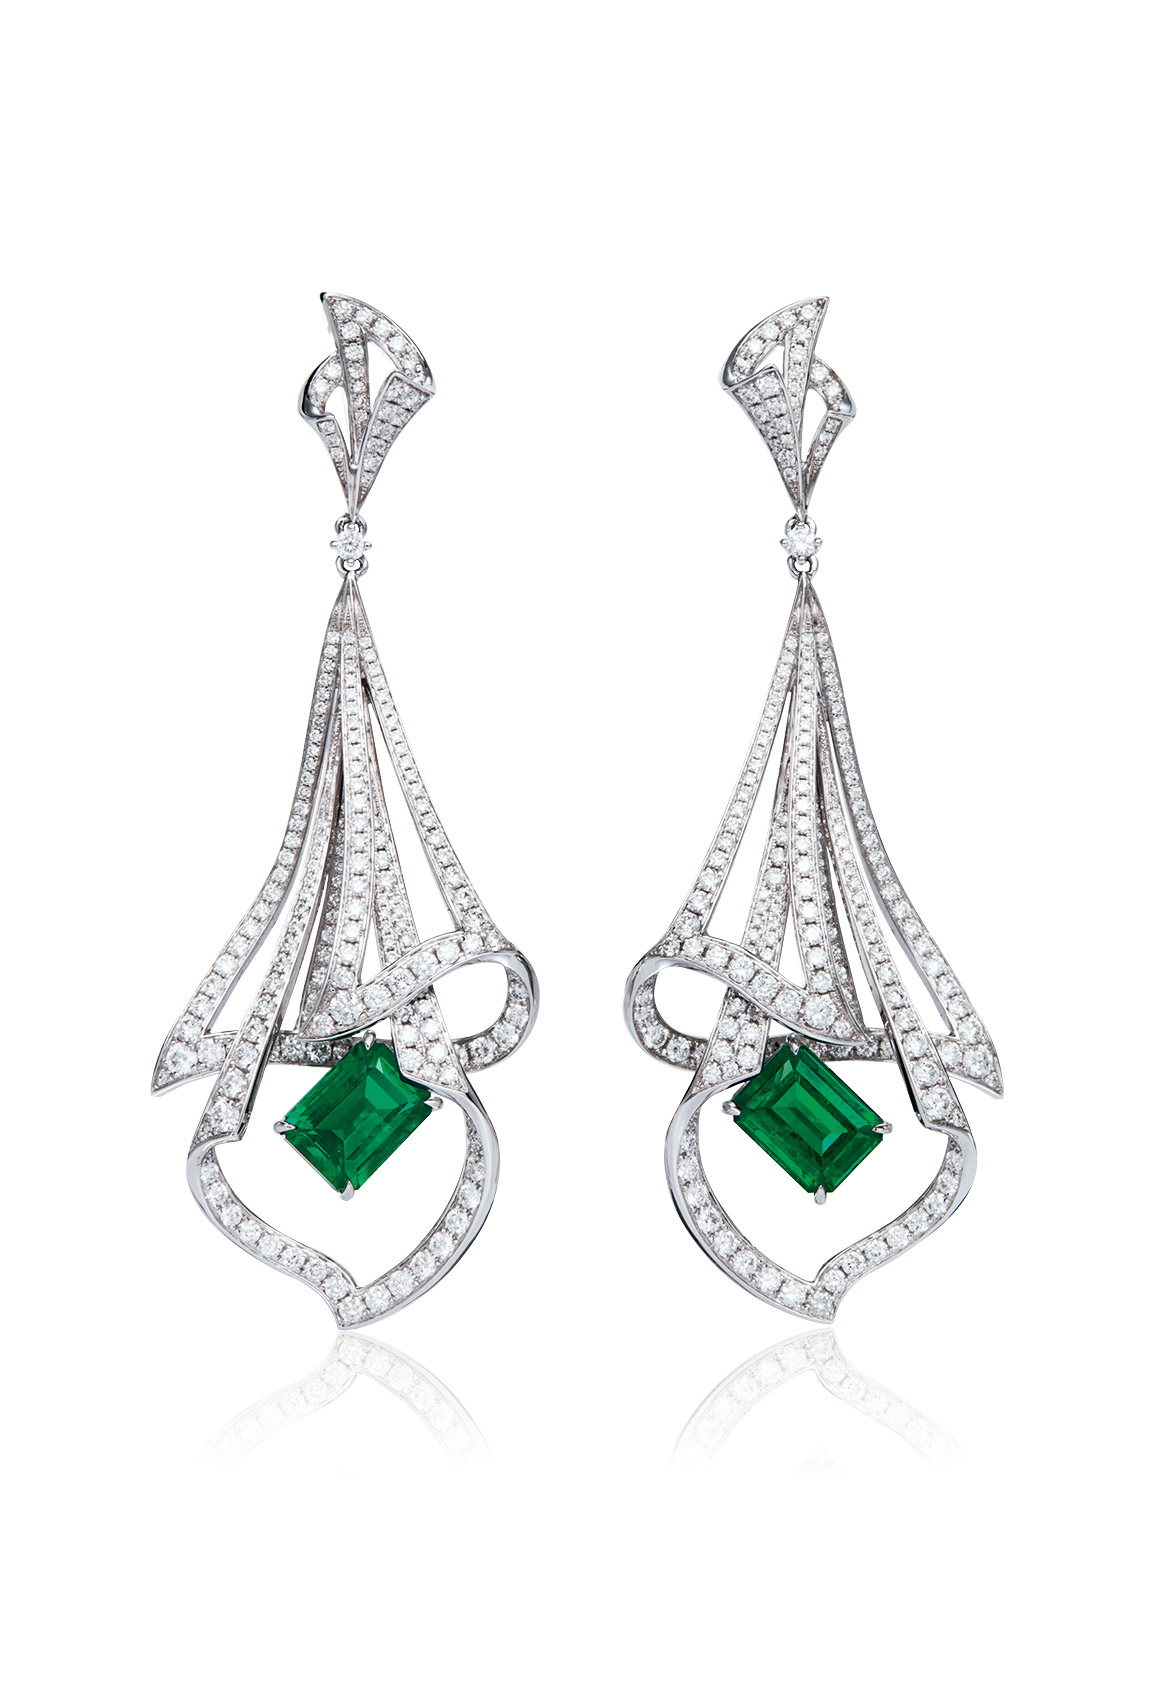 18k金天然钻石vividgreen 祖母绿耳坠水滴设计款耳钉环高端珠宝-阿里巴巴